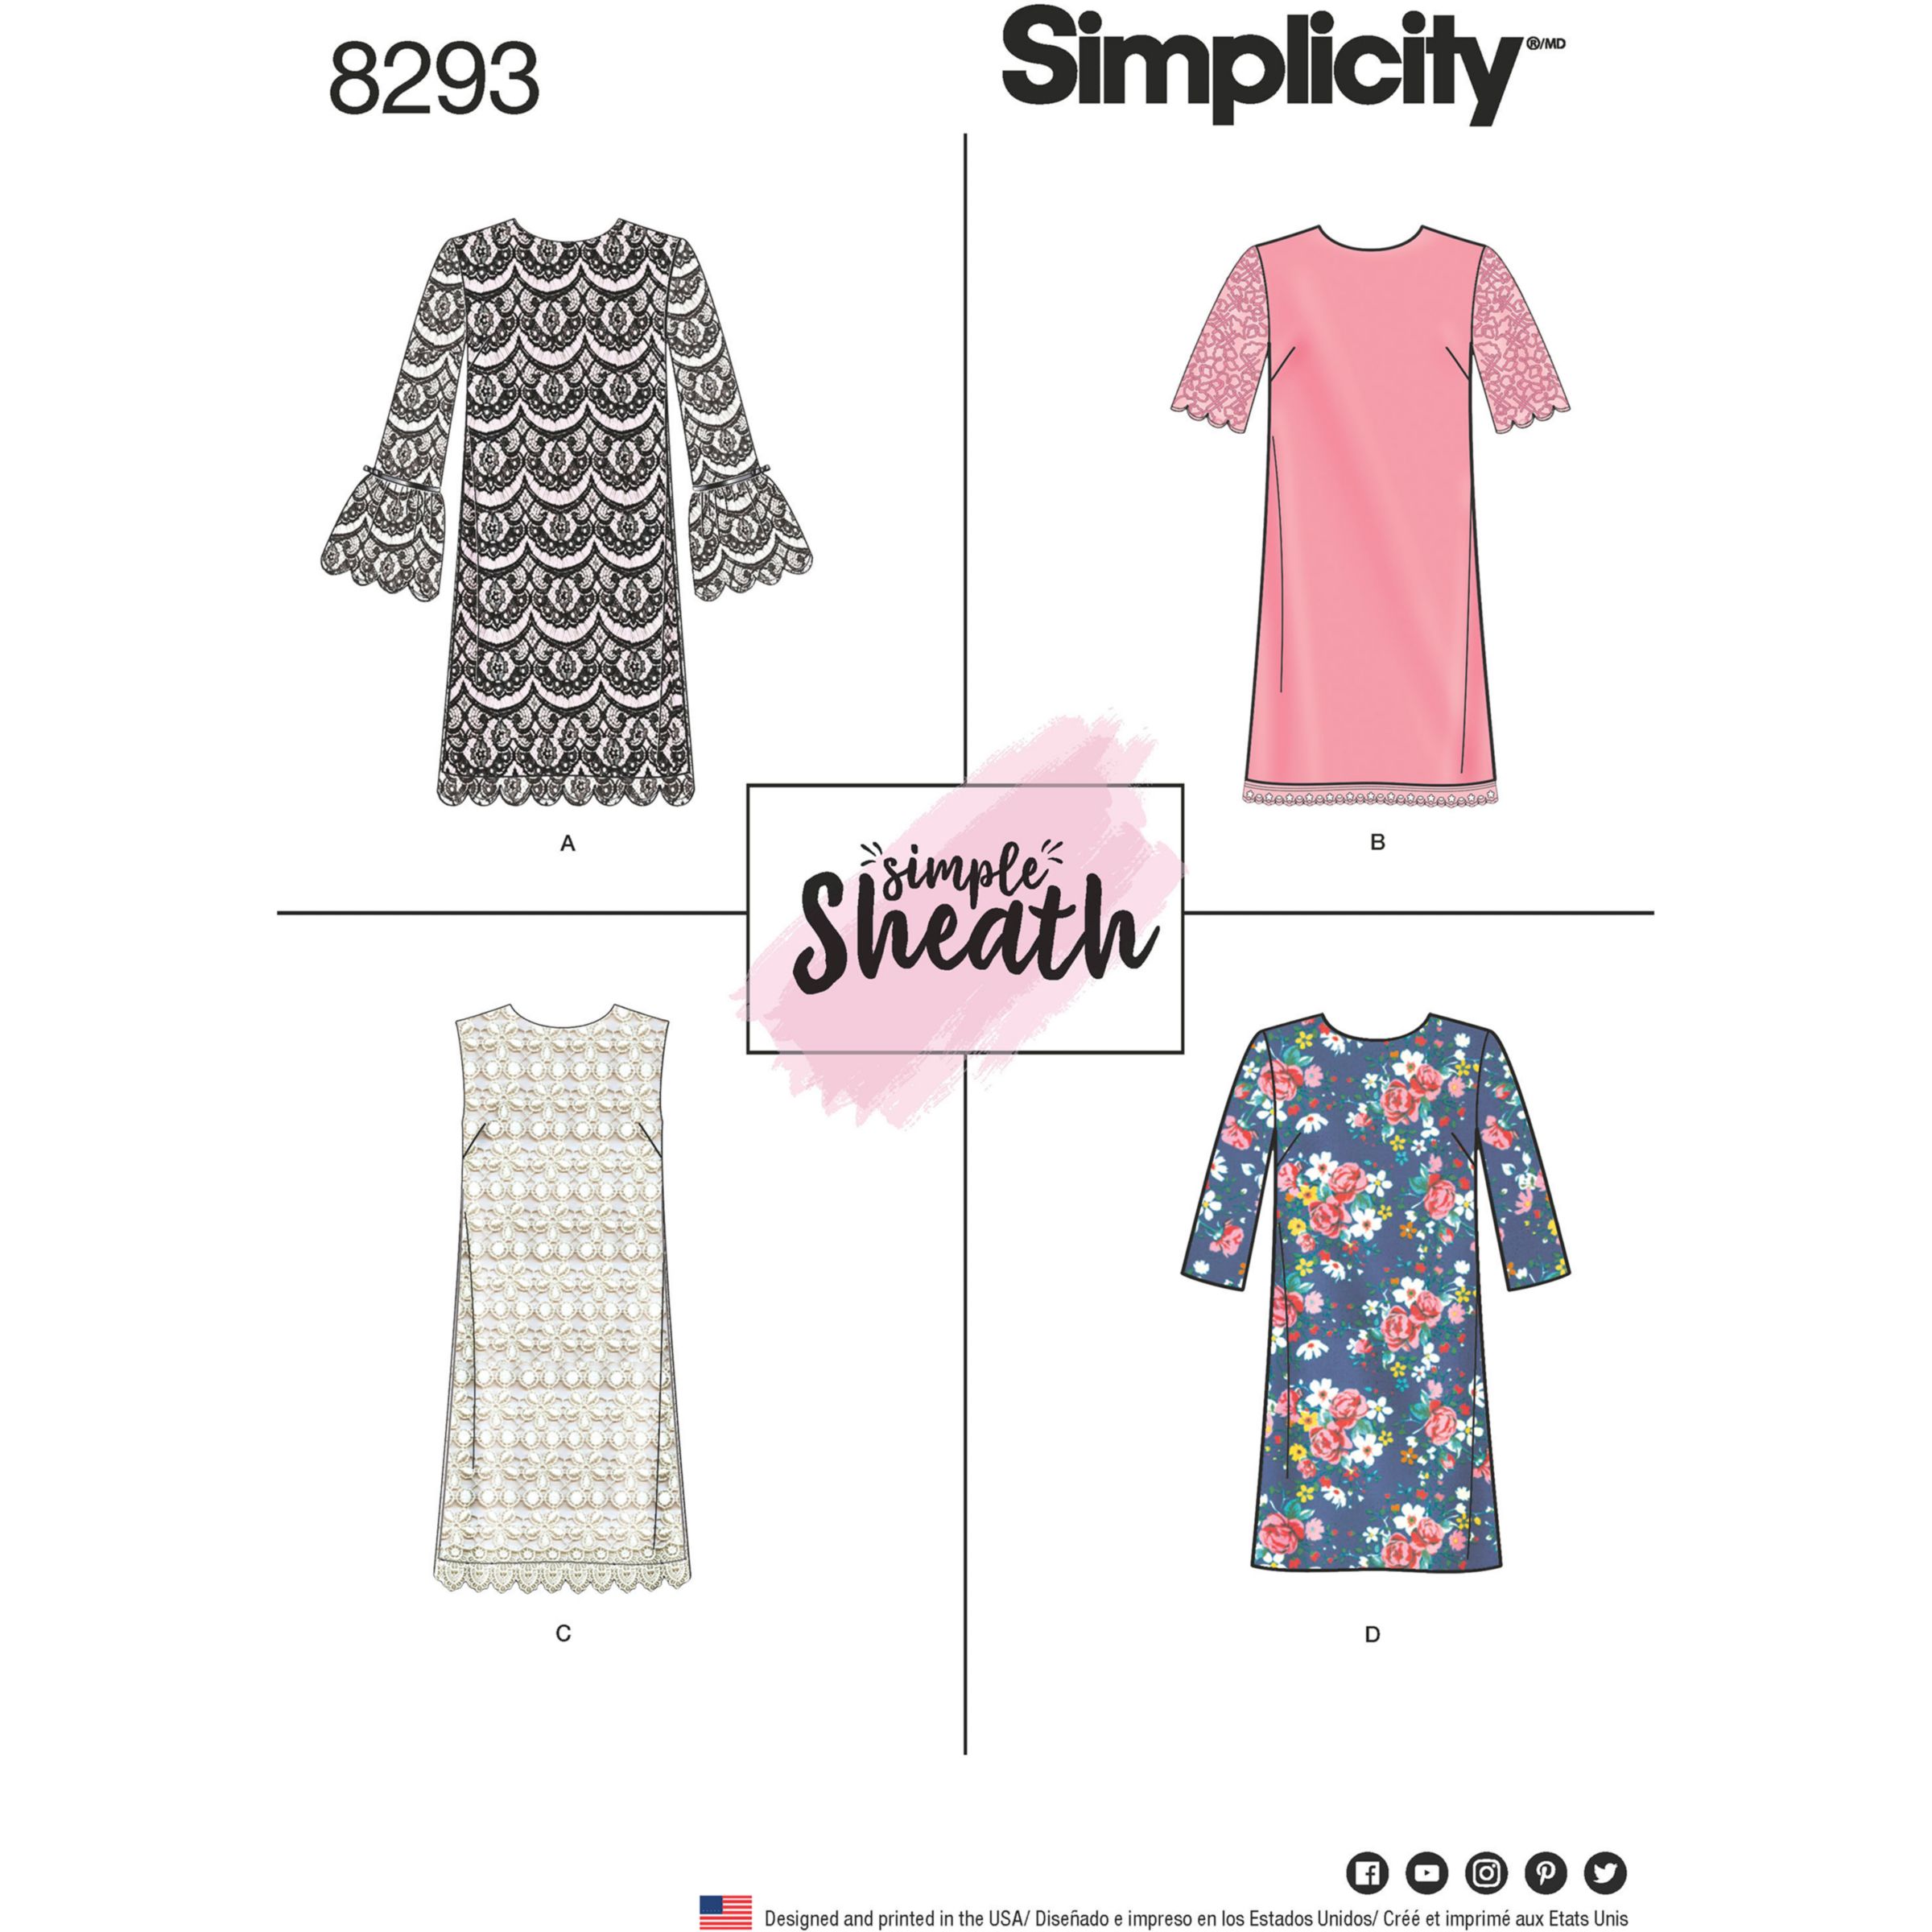 Simple sheath dress patterns for women